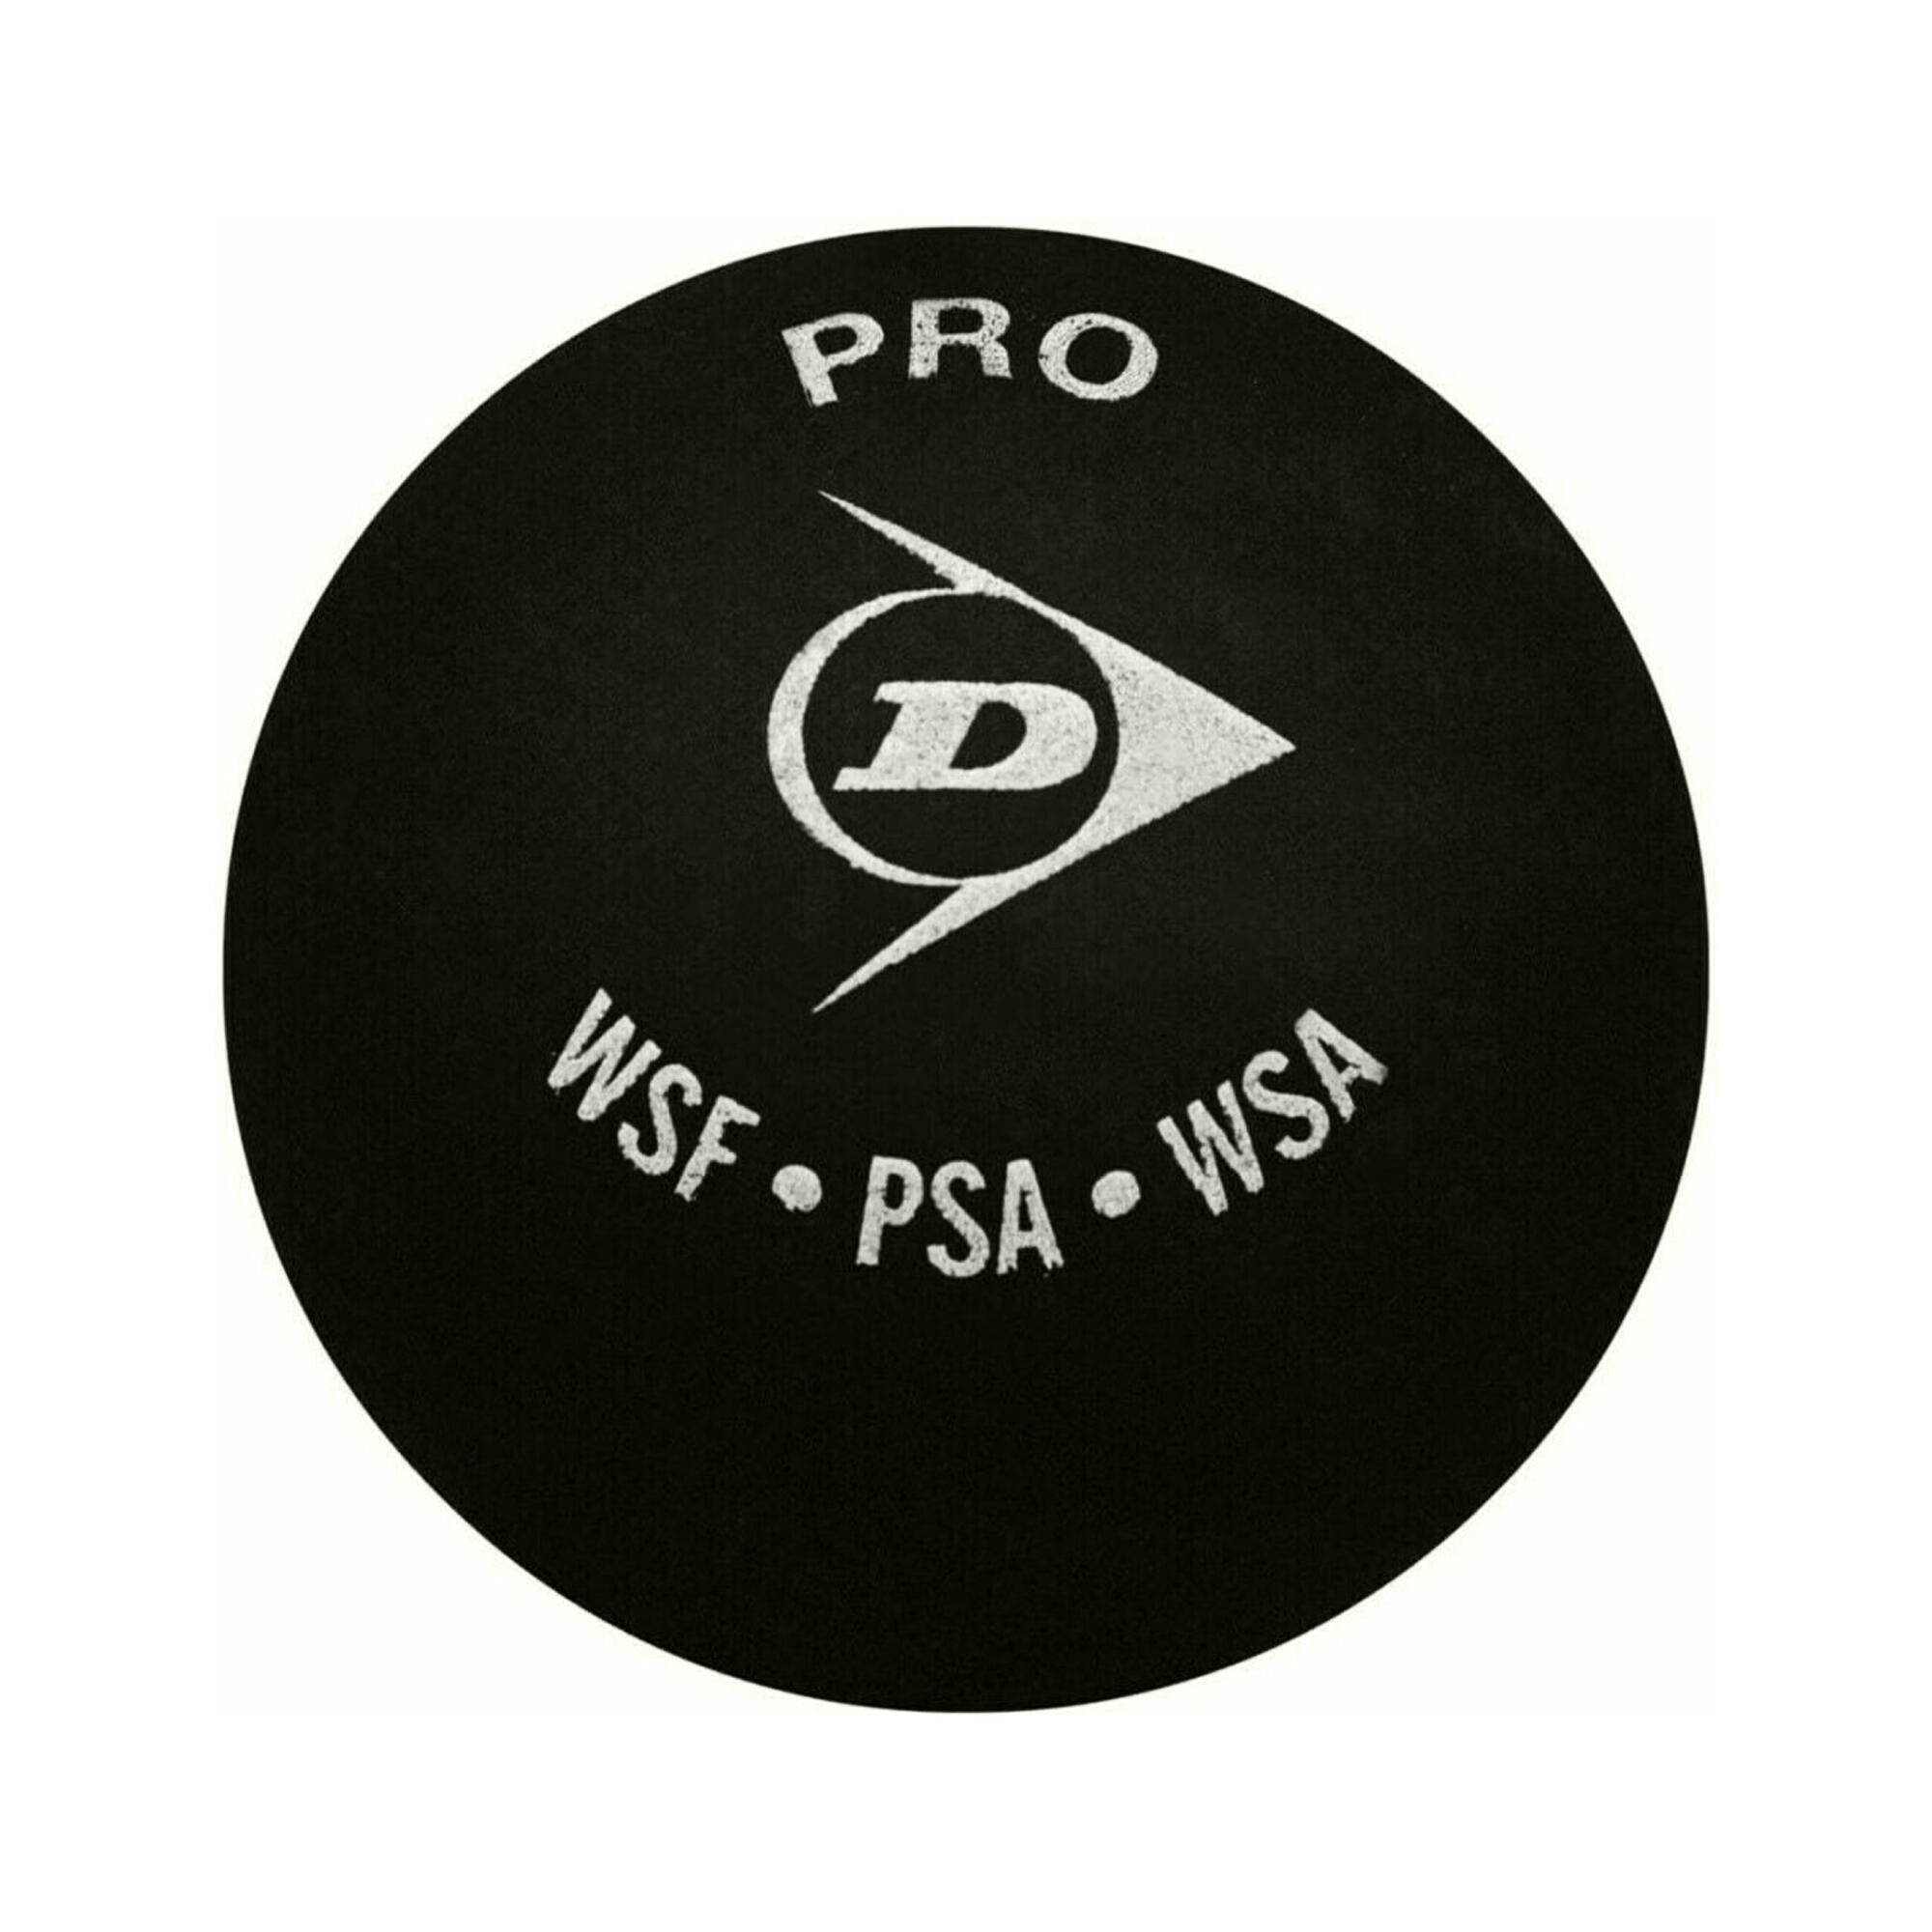 DUNLOP Pro Squash Balls (Pack Of 3) (Black)